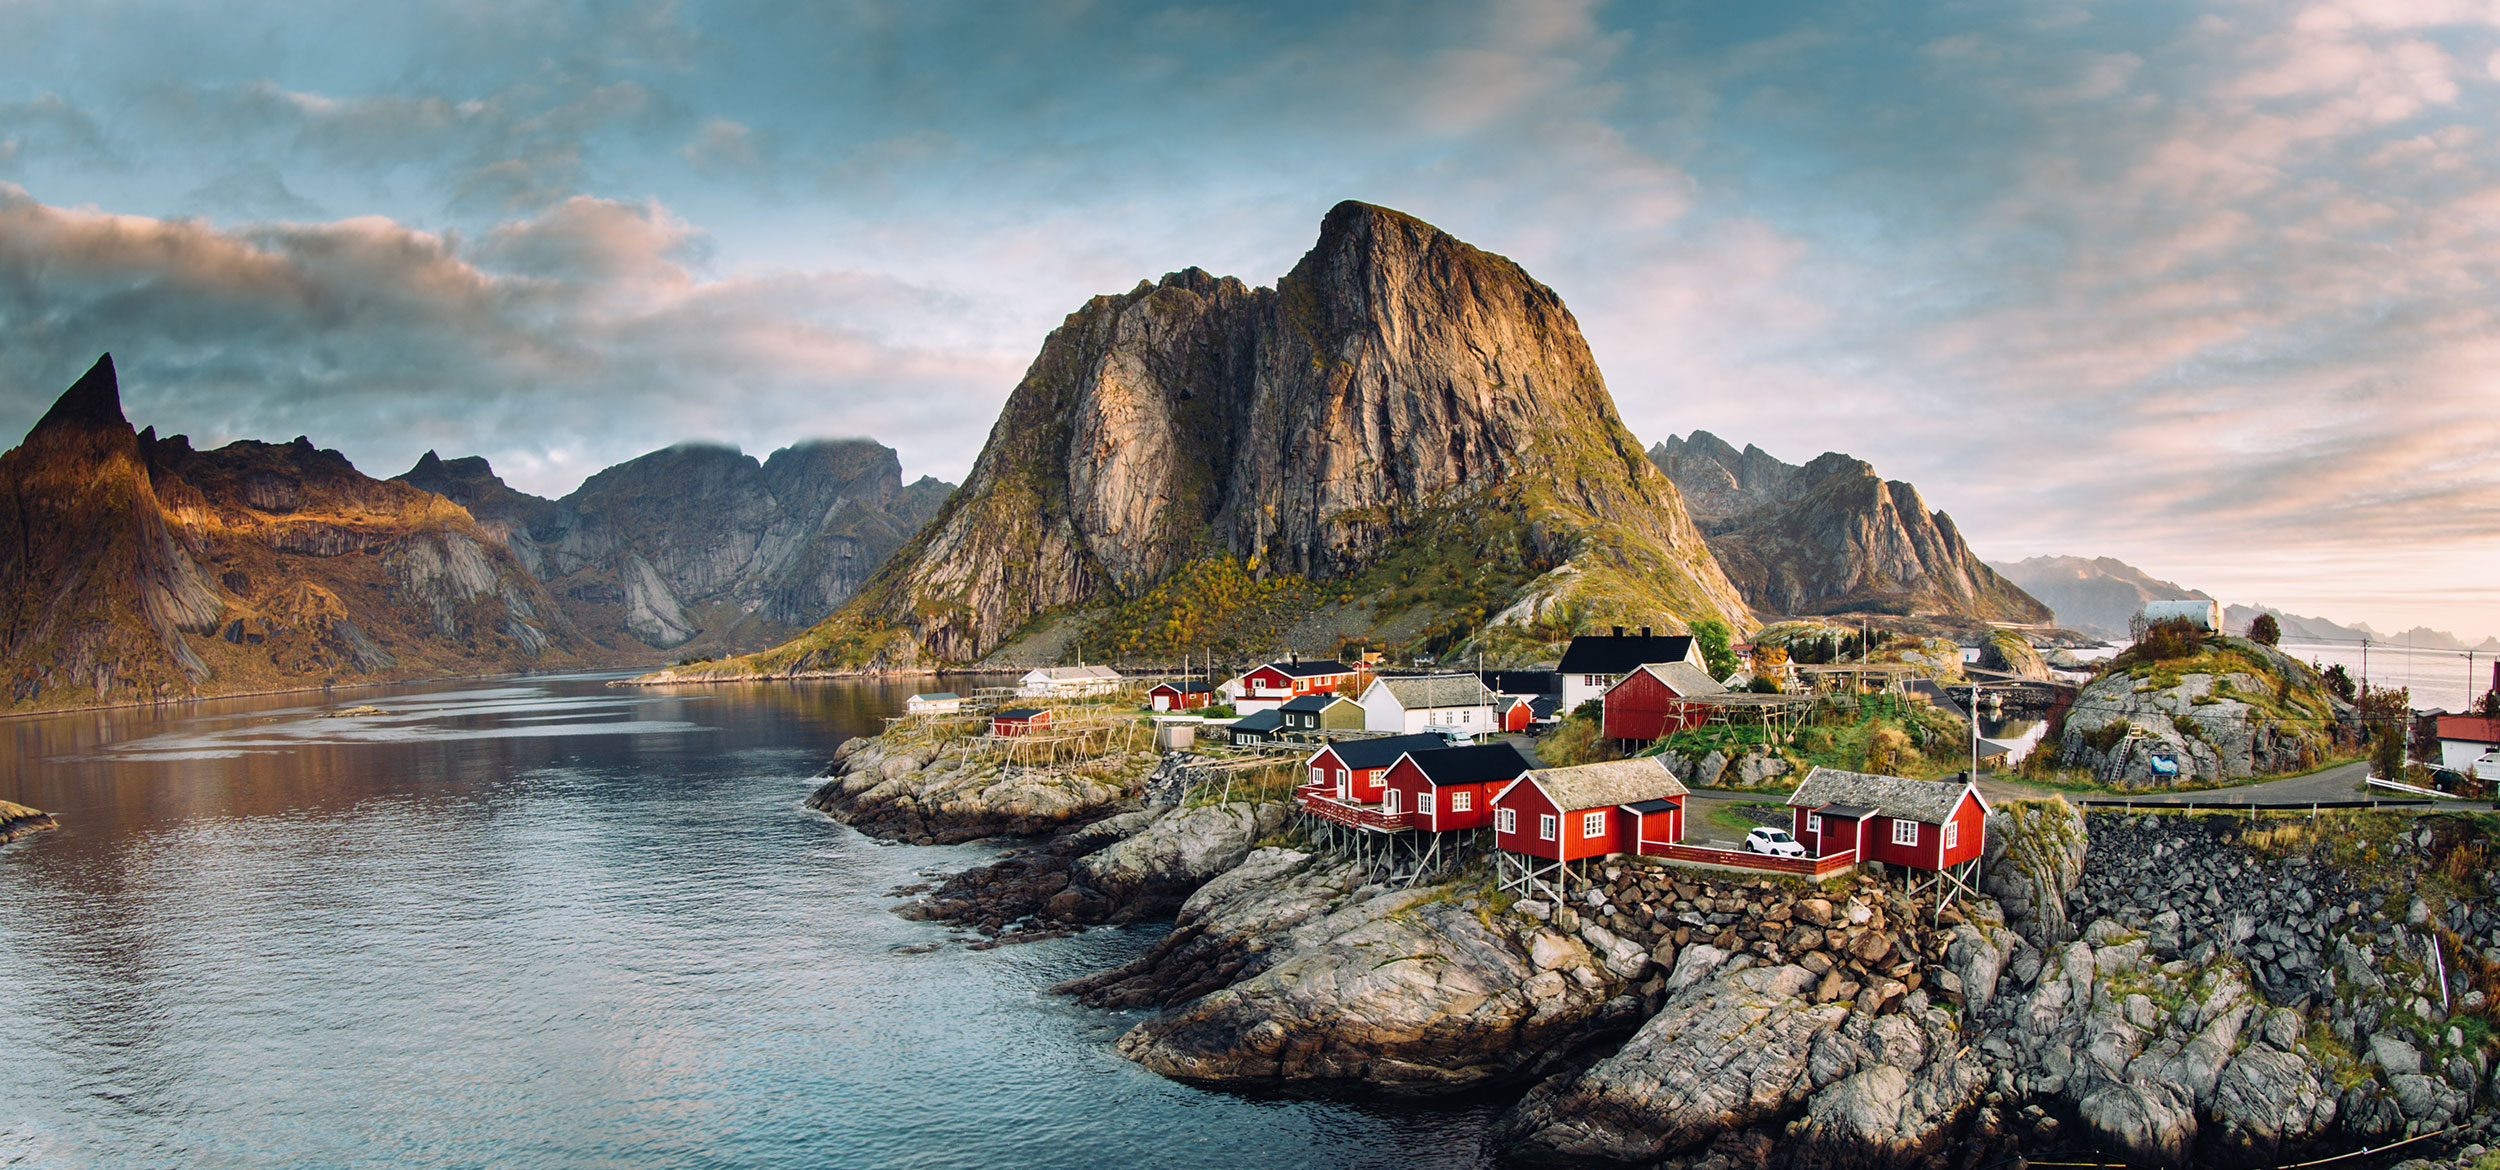 Norwegian fishing village at the Lofoten Islands in Norway.